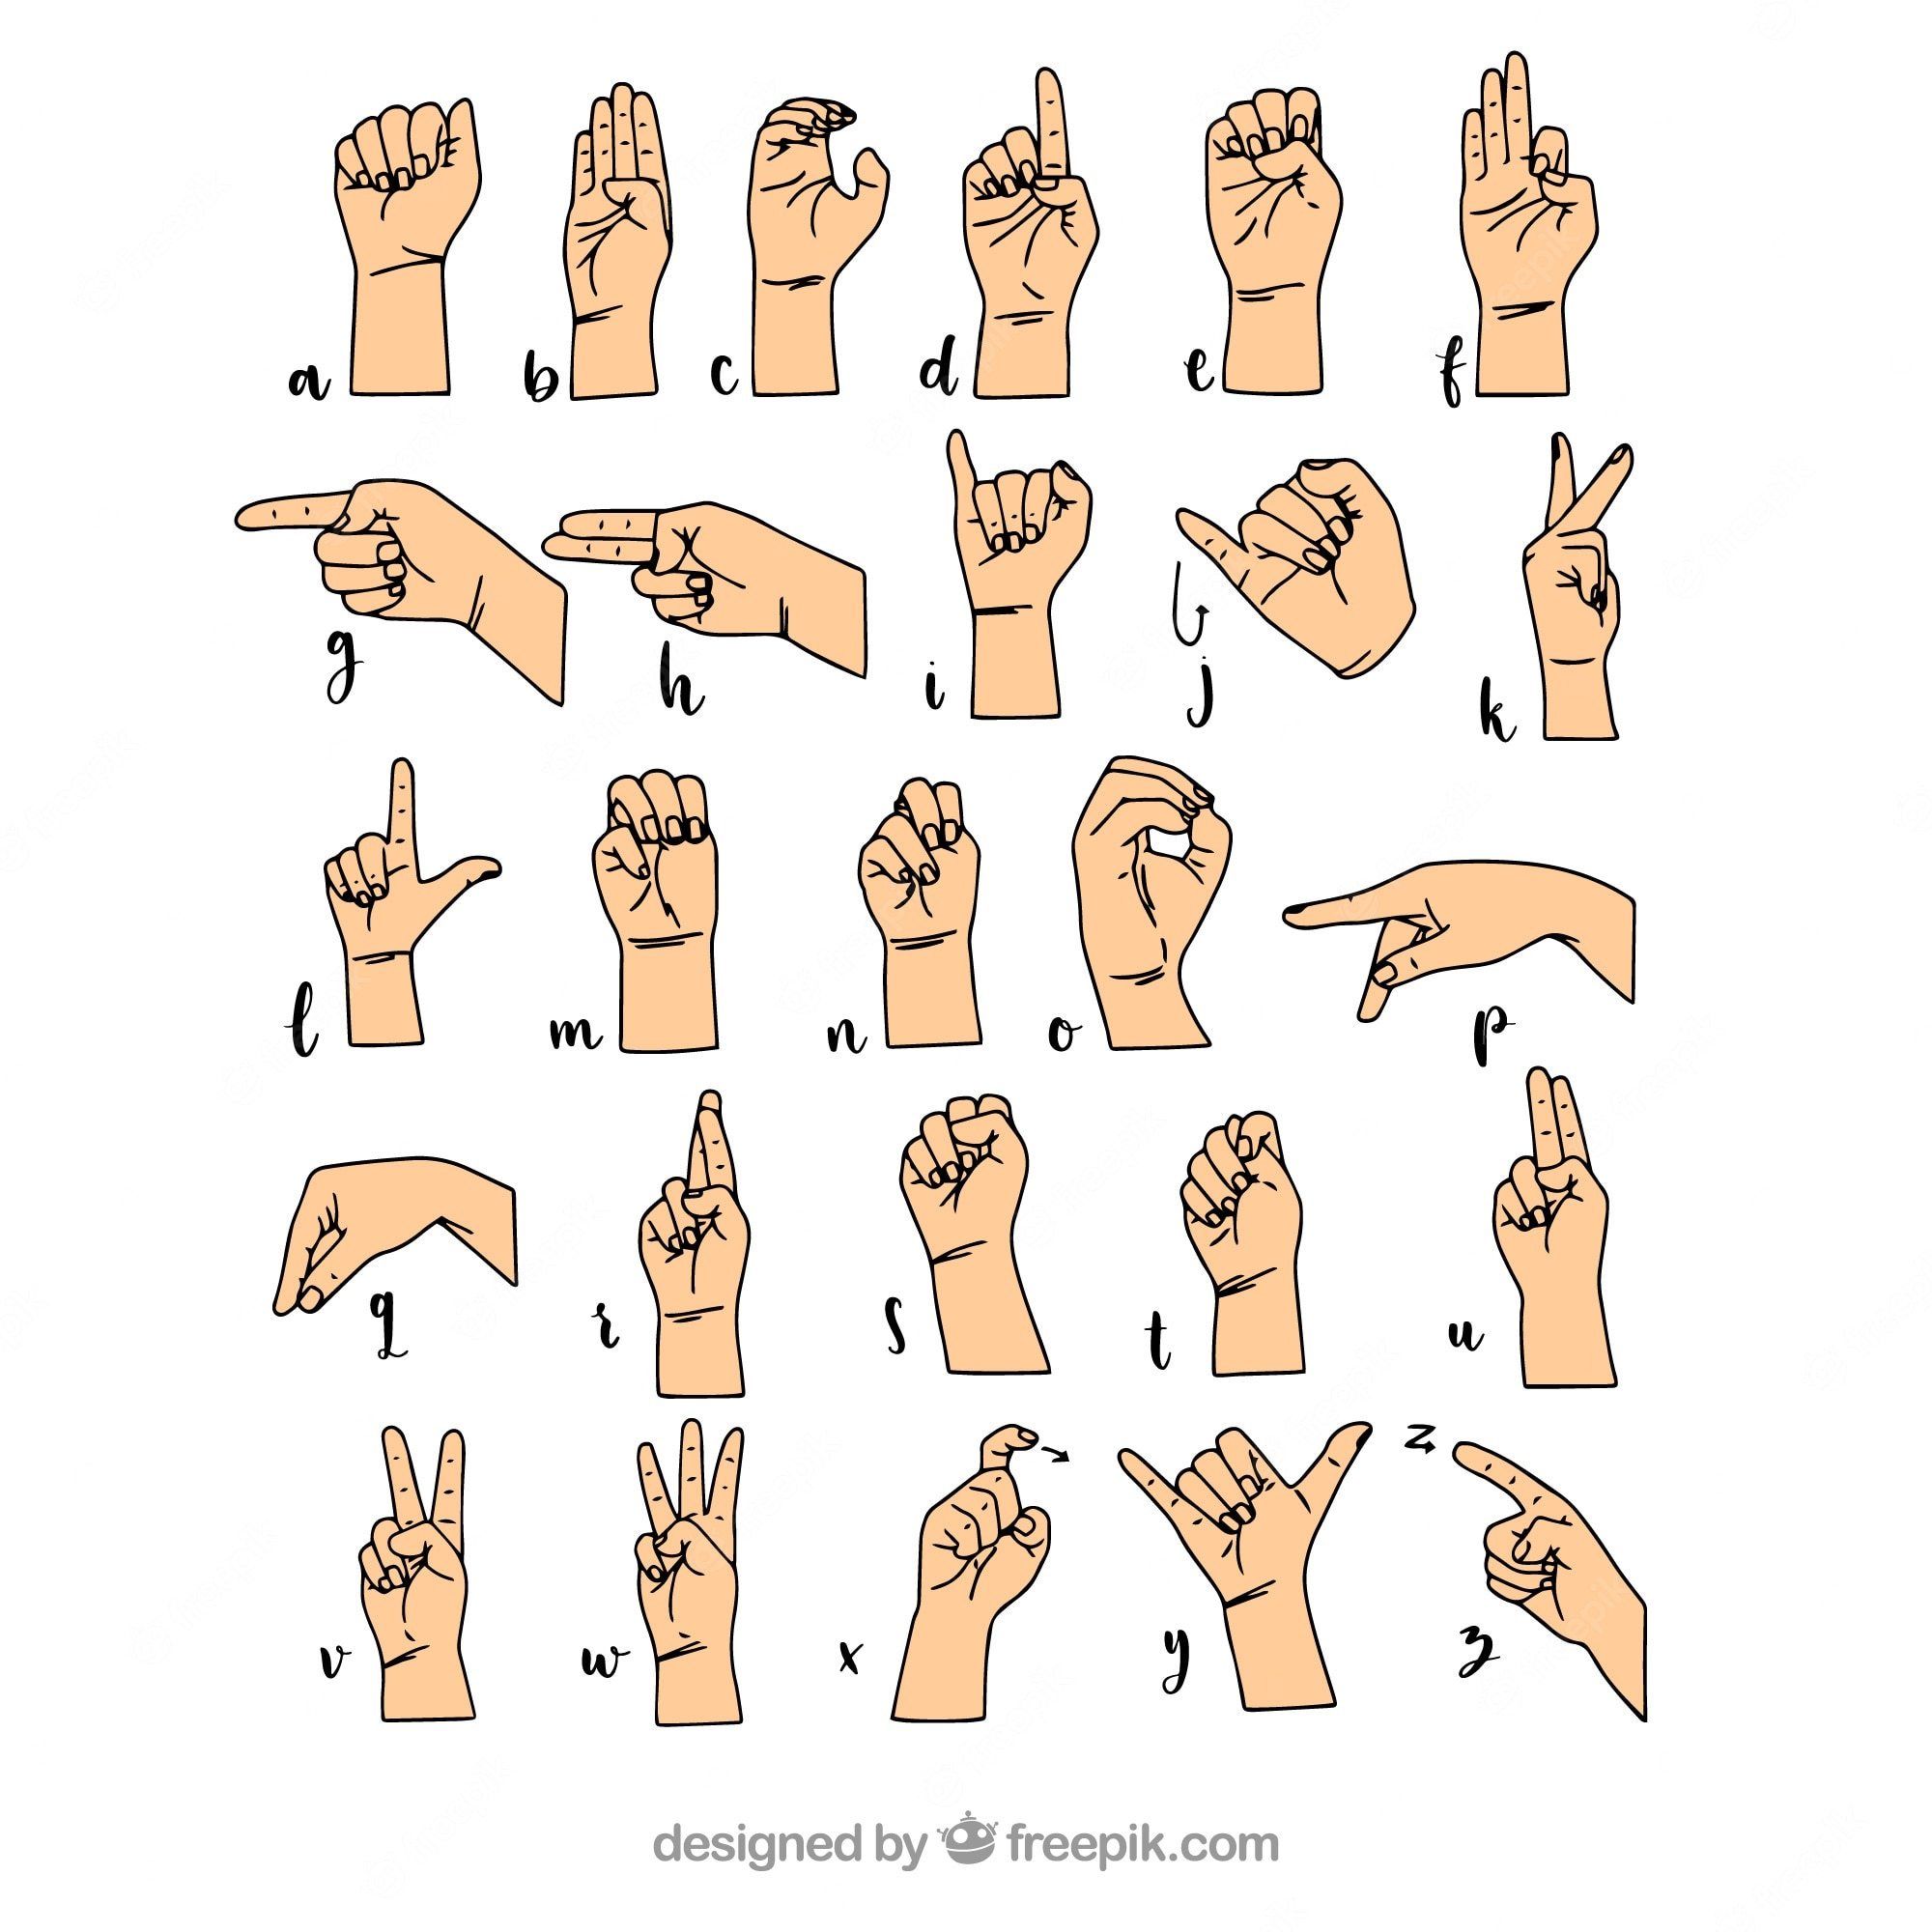 BSL (British Sign Language) - Class 6 - Quizizz